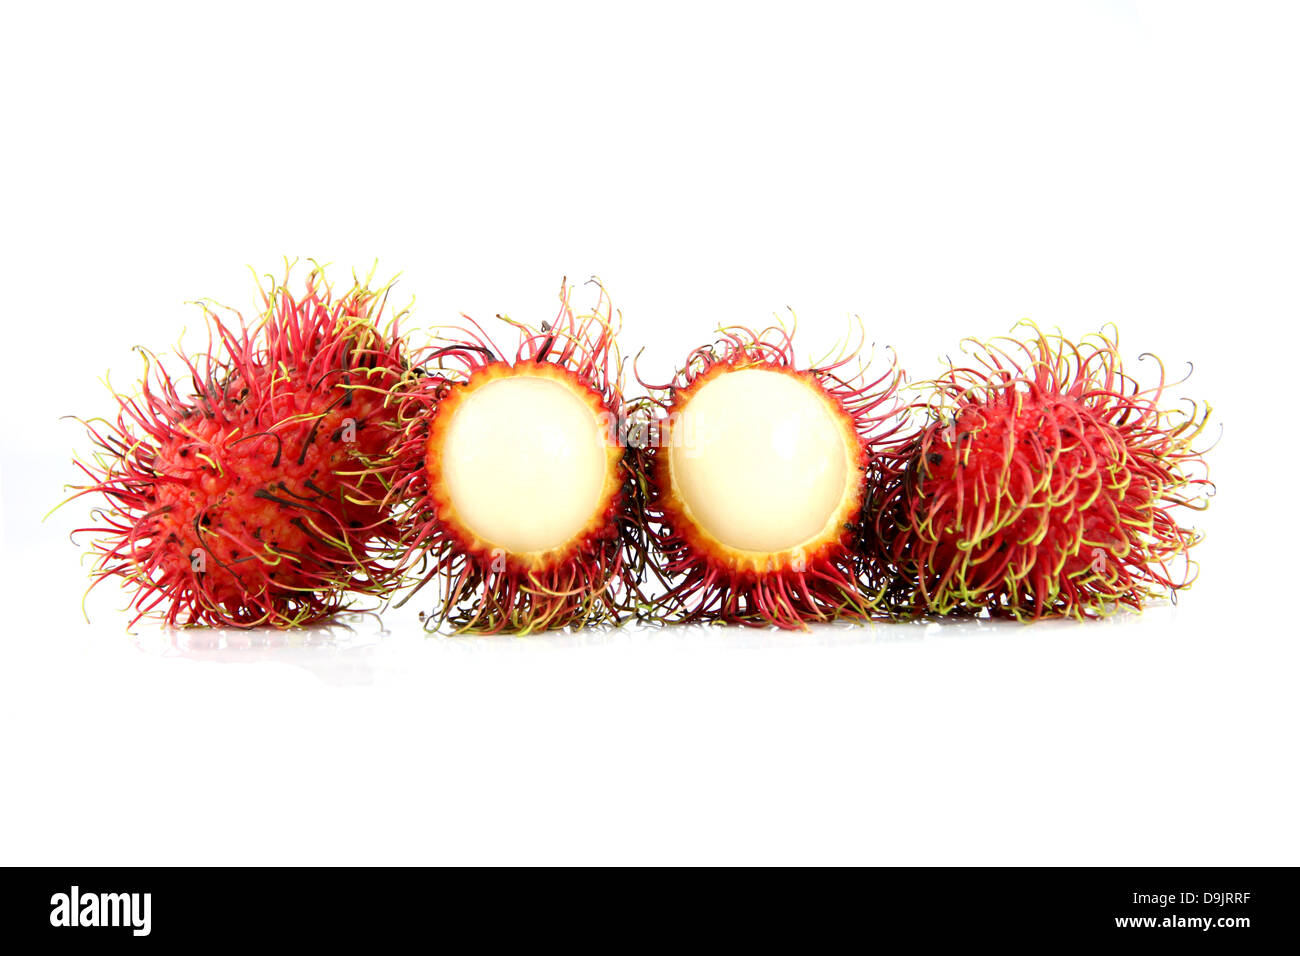 Rambutan Fruit is Peeled off on the white Background Stock Photo